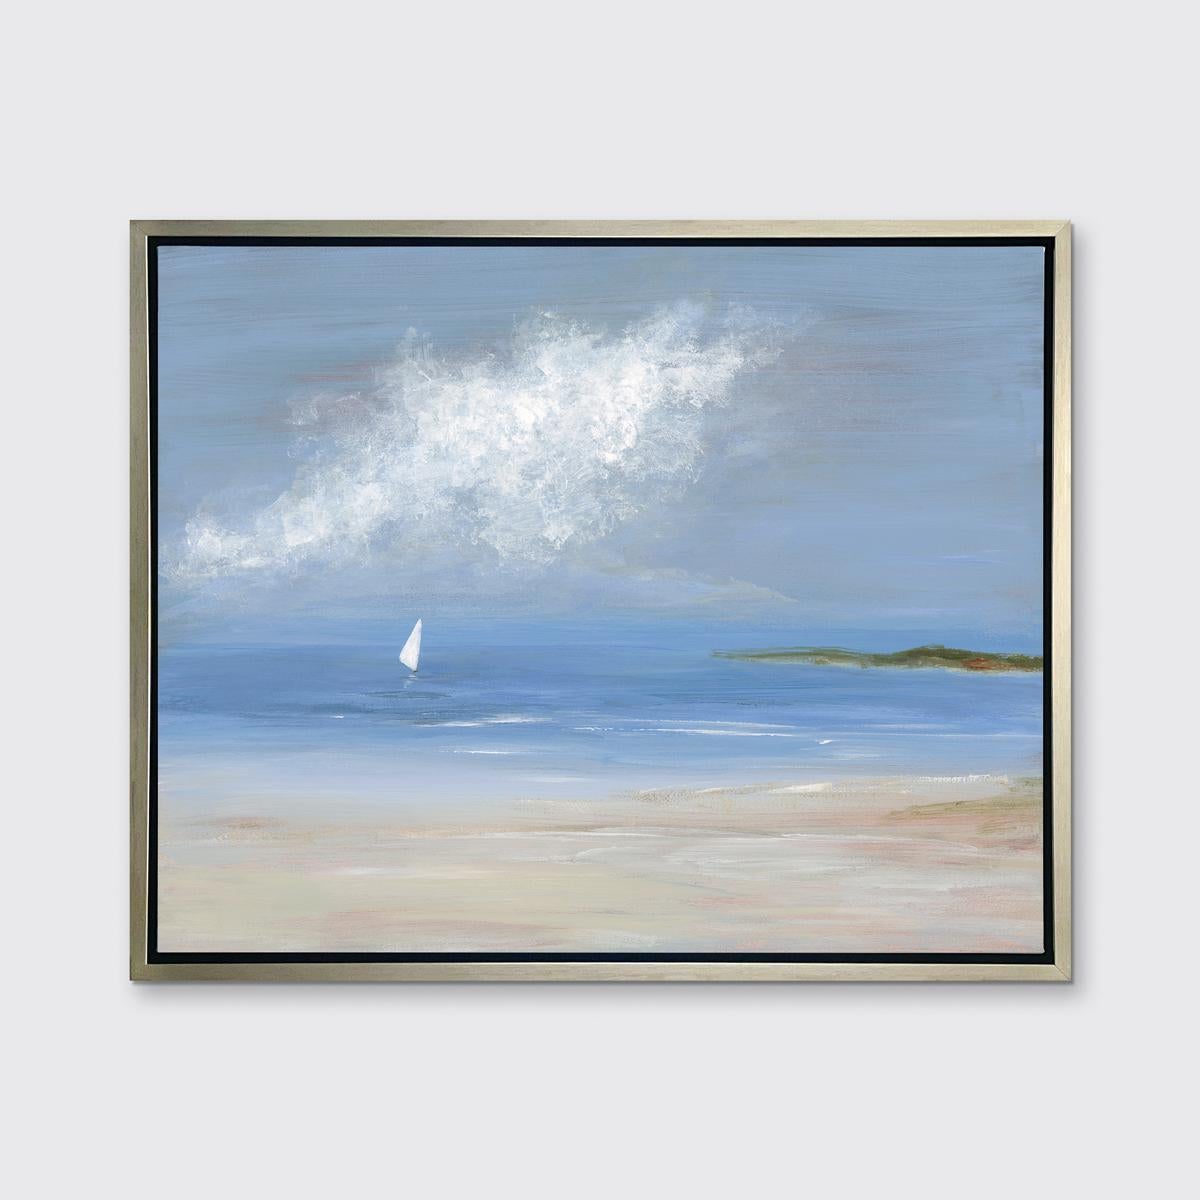 S. Cora Aldo Landscape Print - "Sunday Sail, " Framed Limited Edition Giclee Print, 36" x 45"